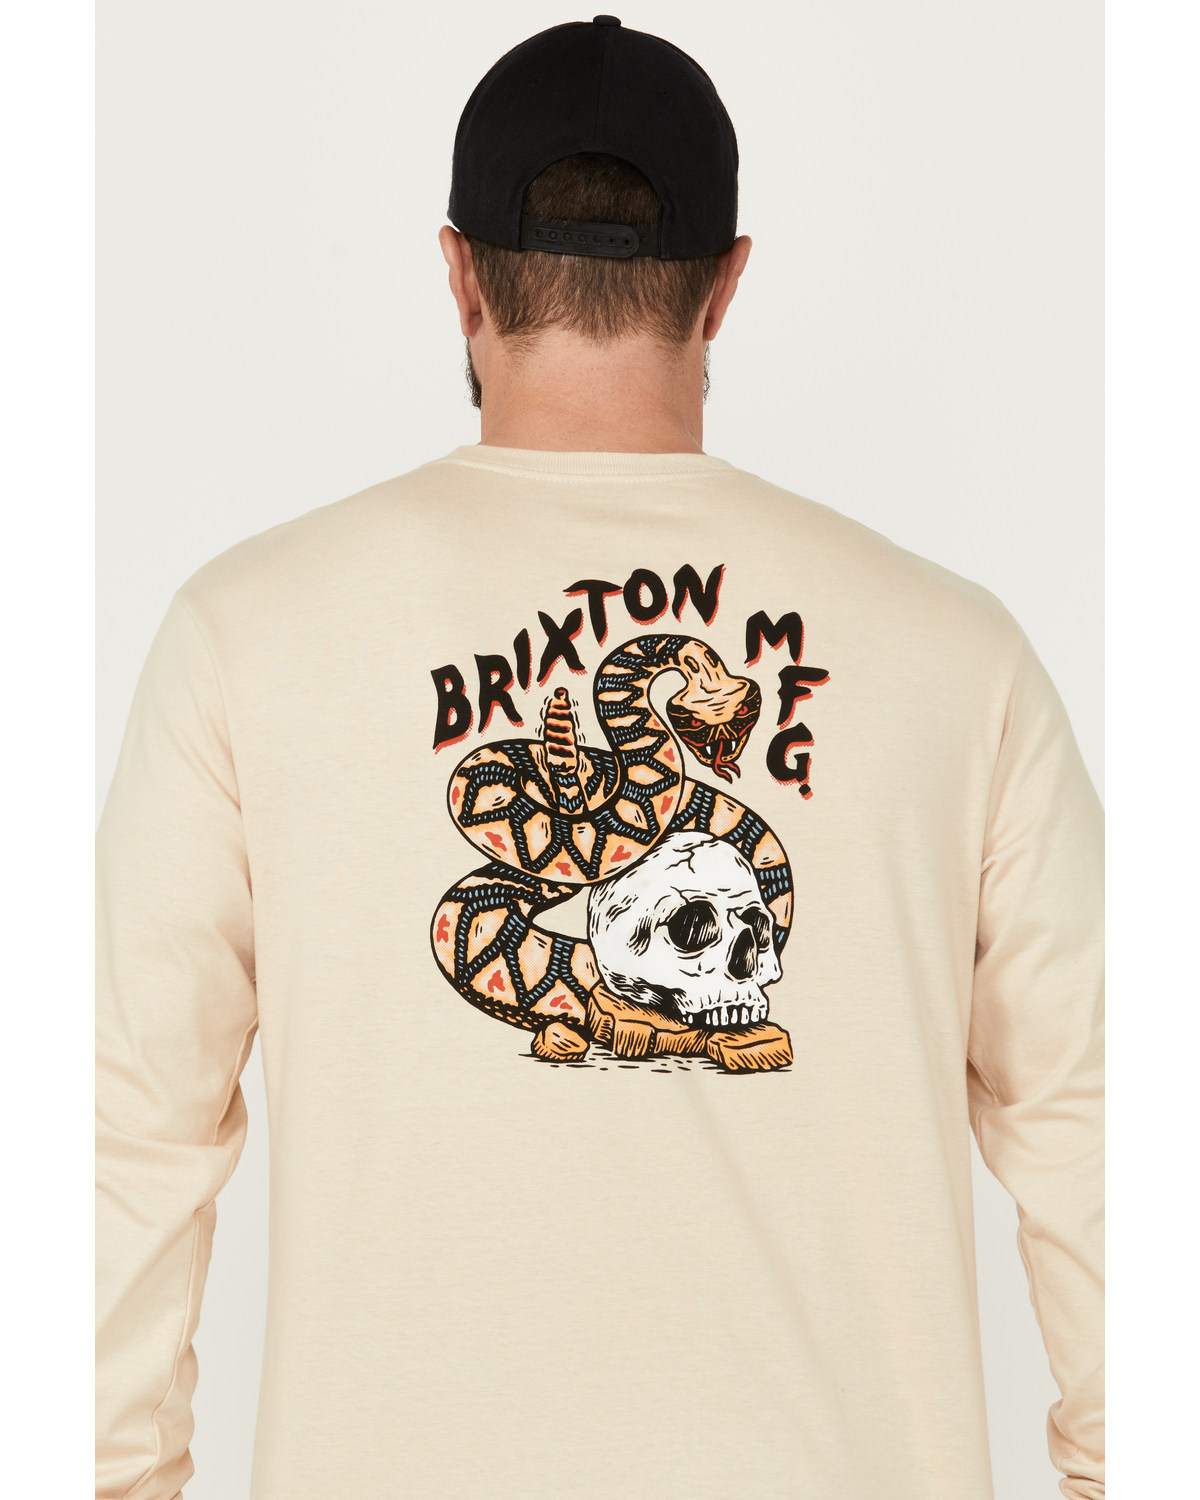 Brixton Men's Trailmoor Snake And Skull Graphic Print Long Sleeve Shirt